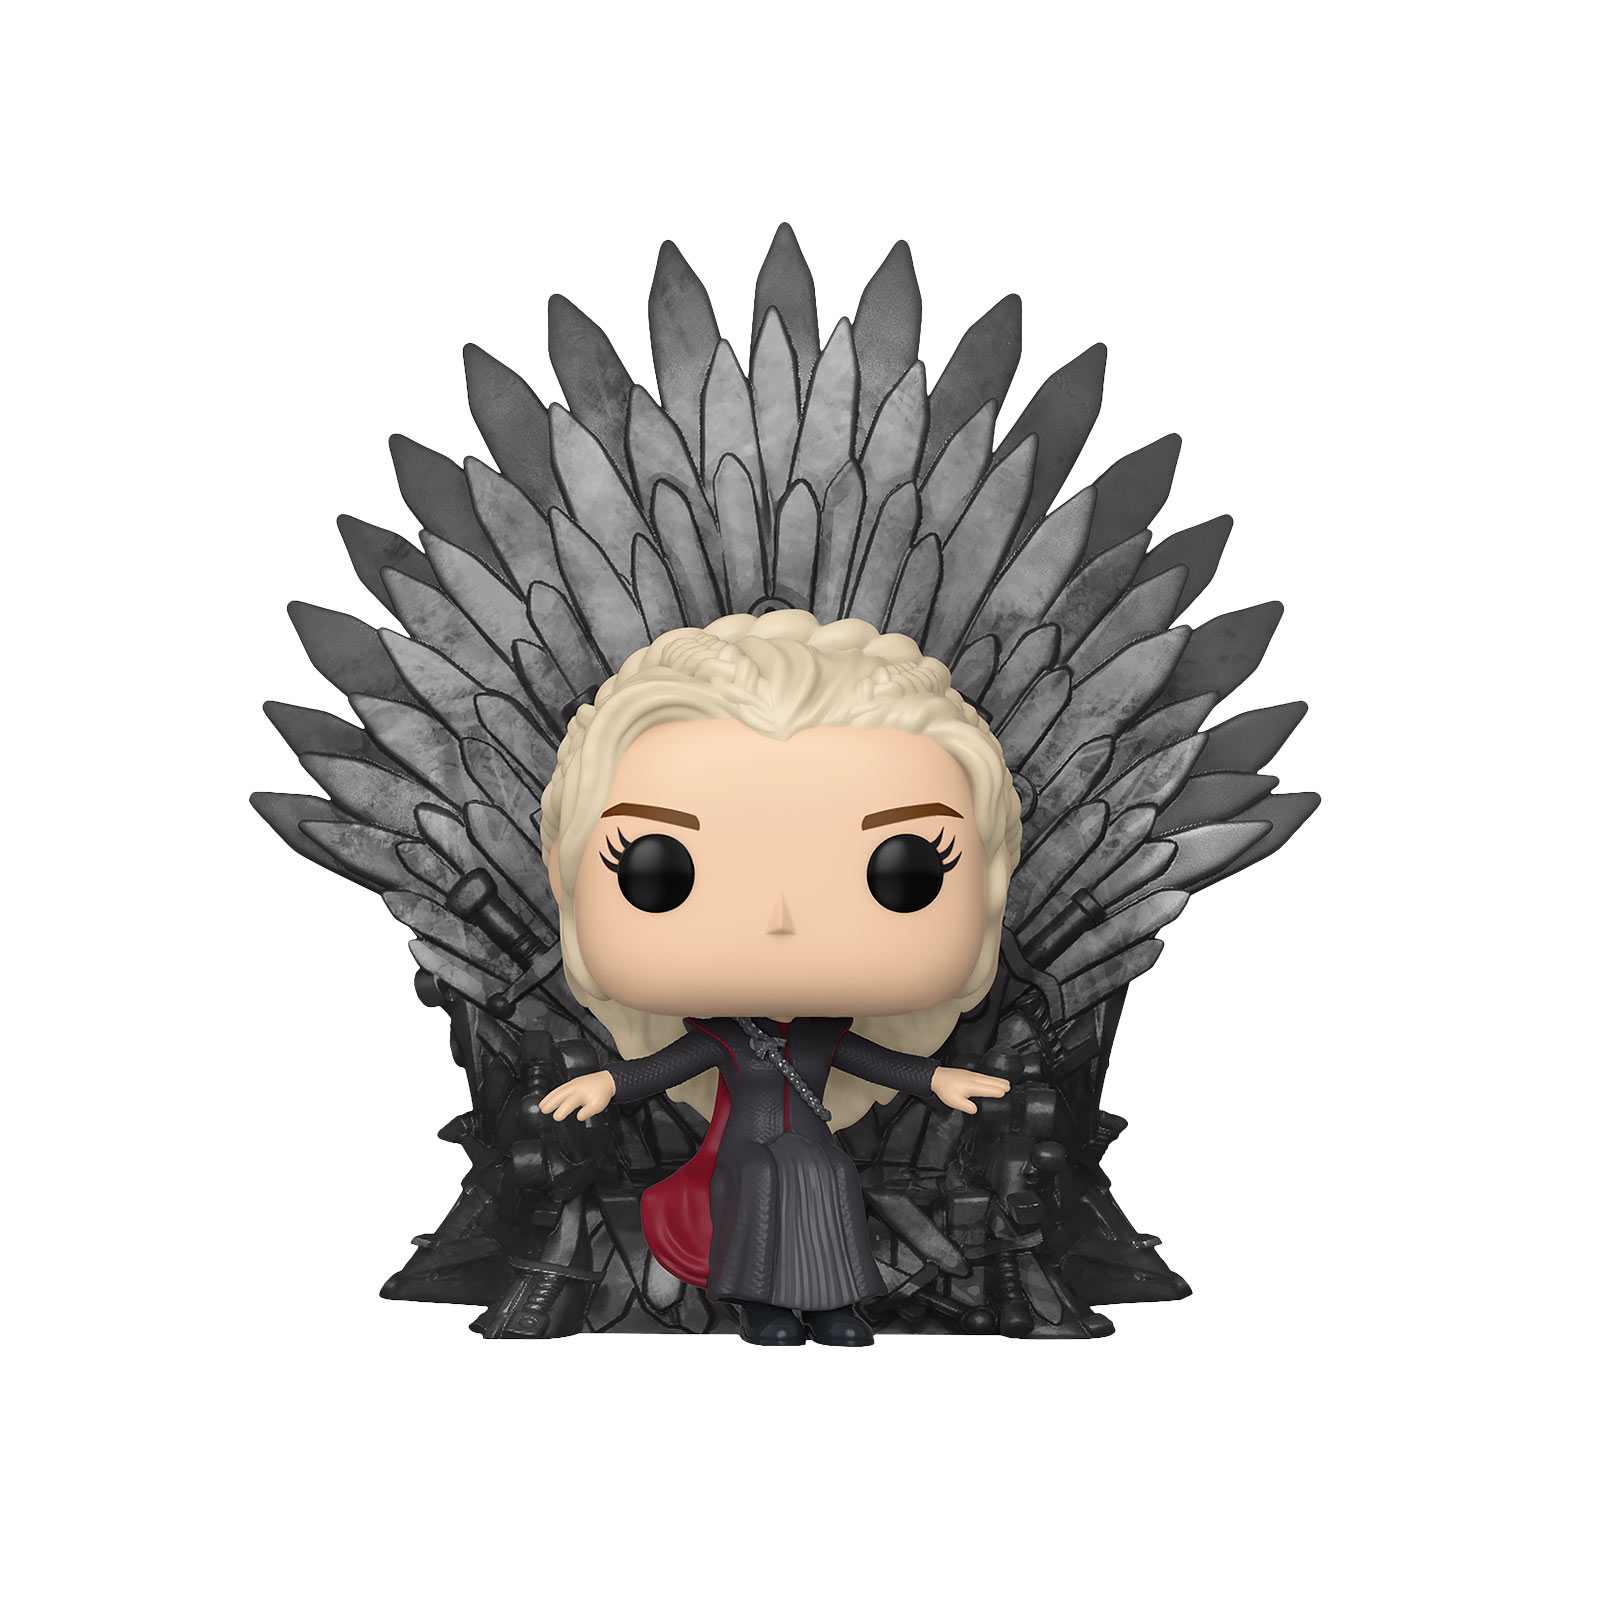 Game of Thrones - Daenerys Targaryen with Iron Throne Funko Pop Figurine